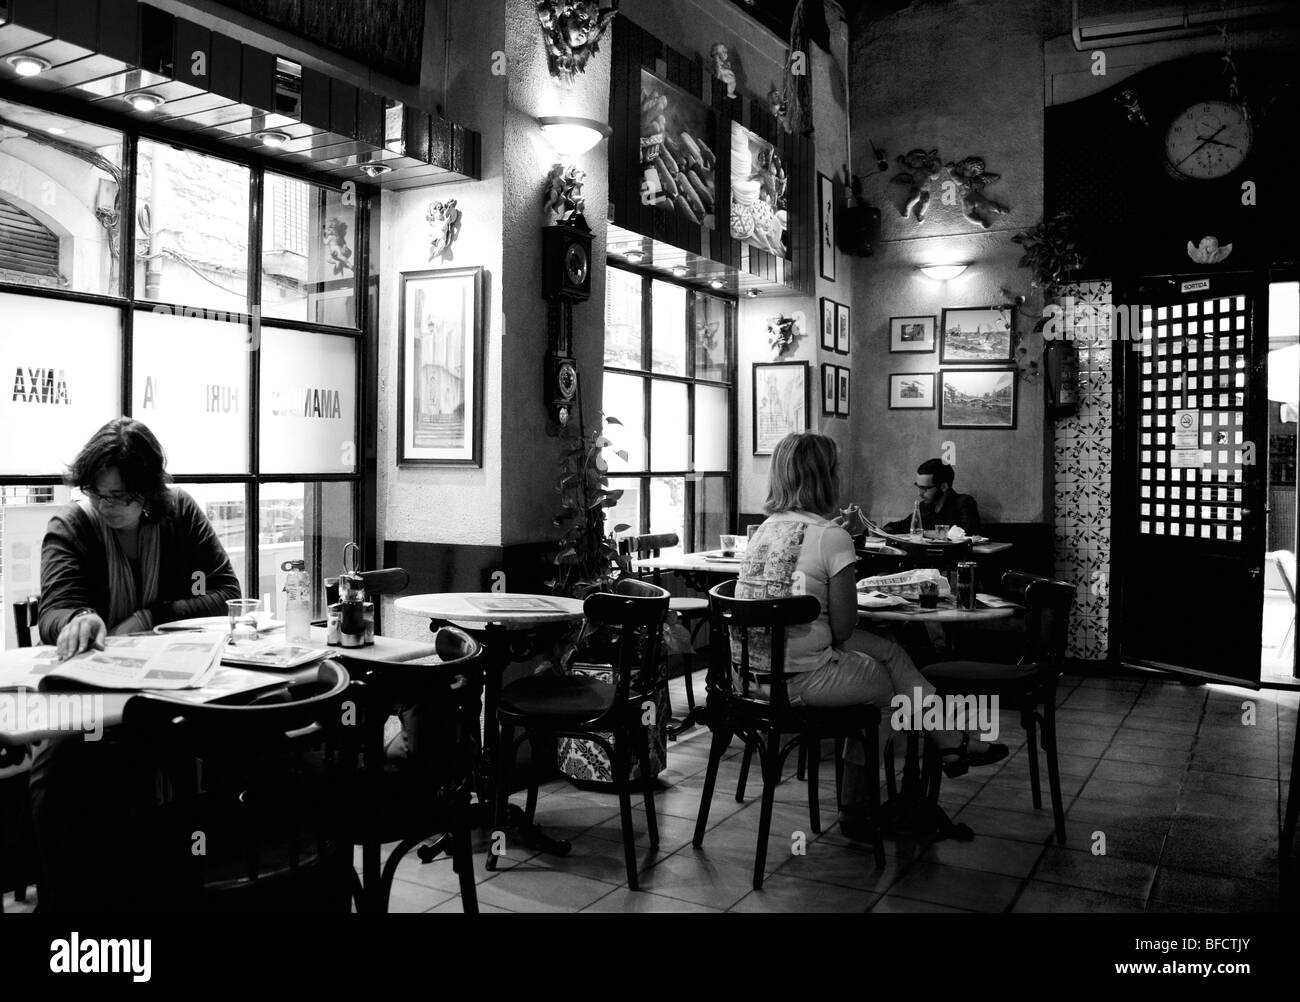 A traditional European/Mediterranean cafe. Stock Photo